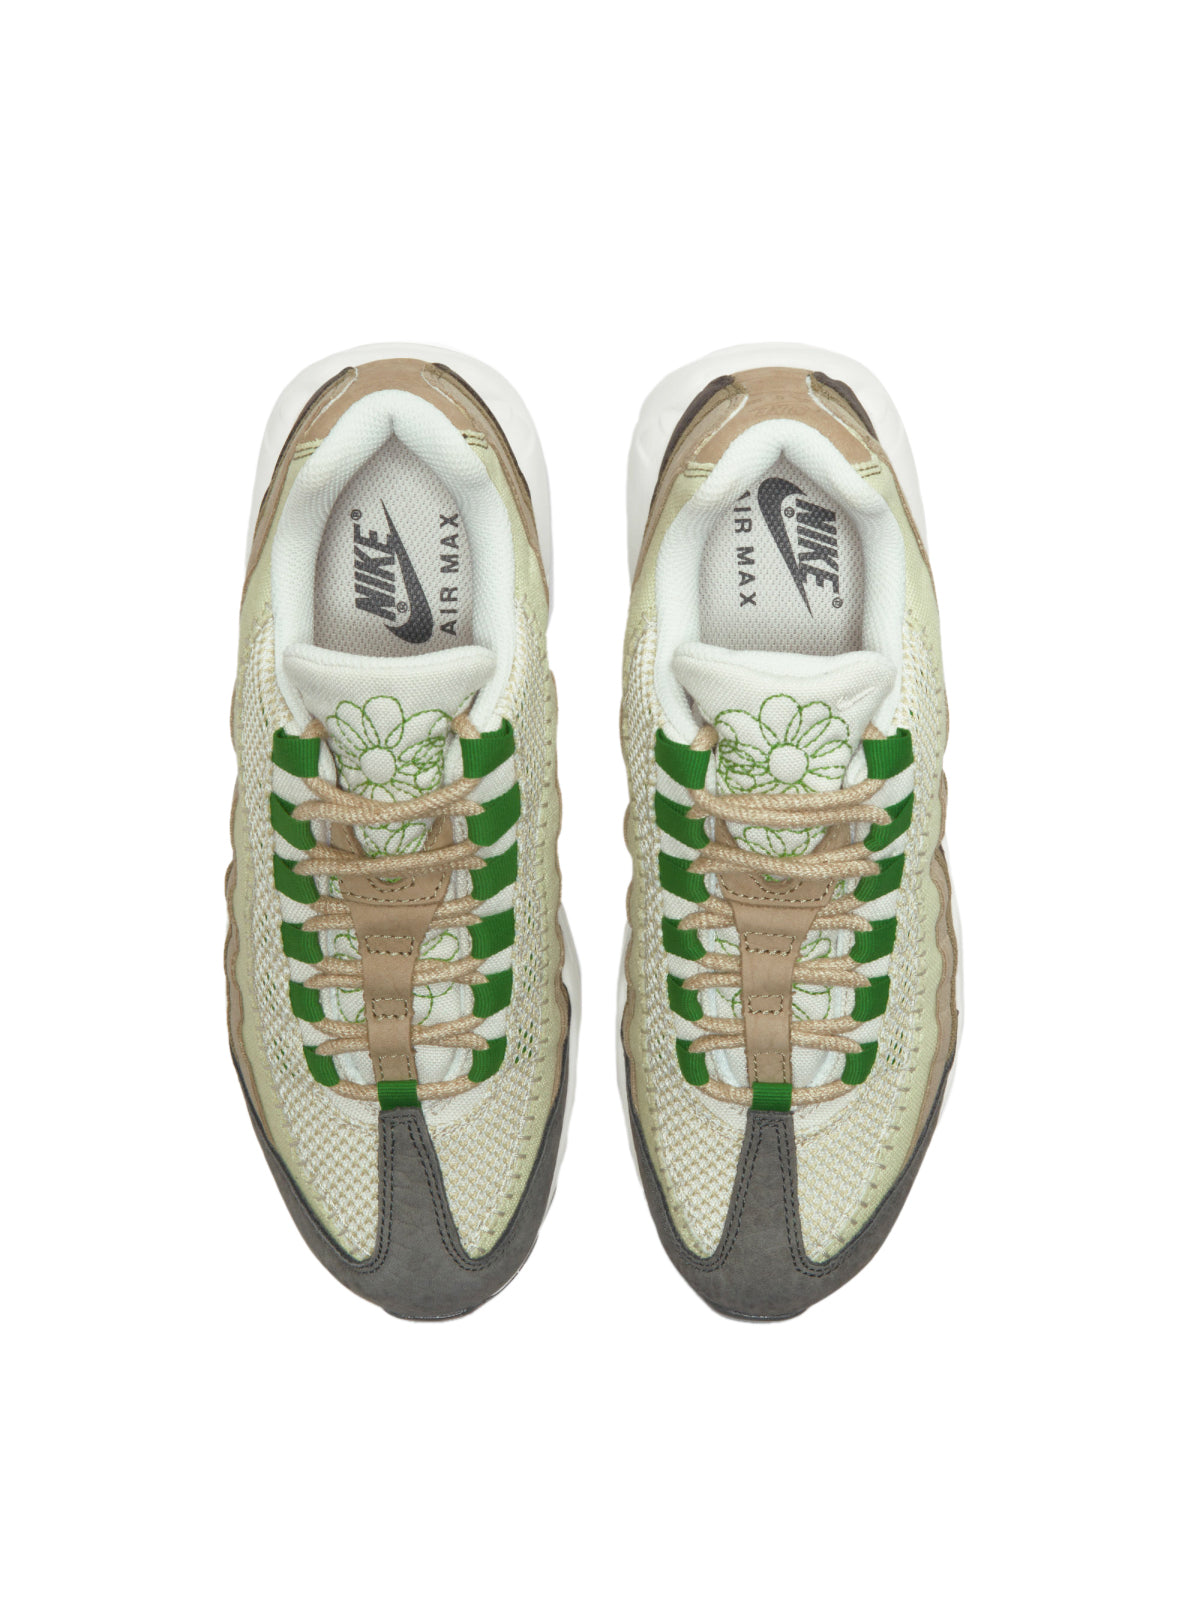 Air Max 95 Chlorophyll Sneakers